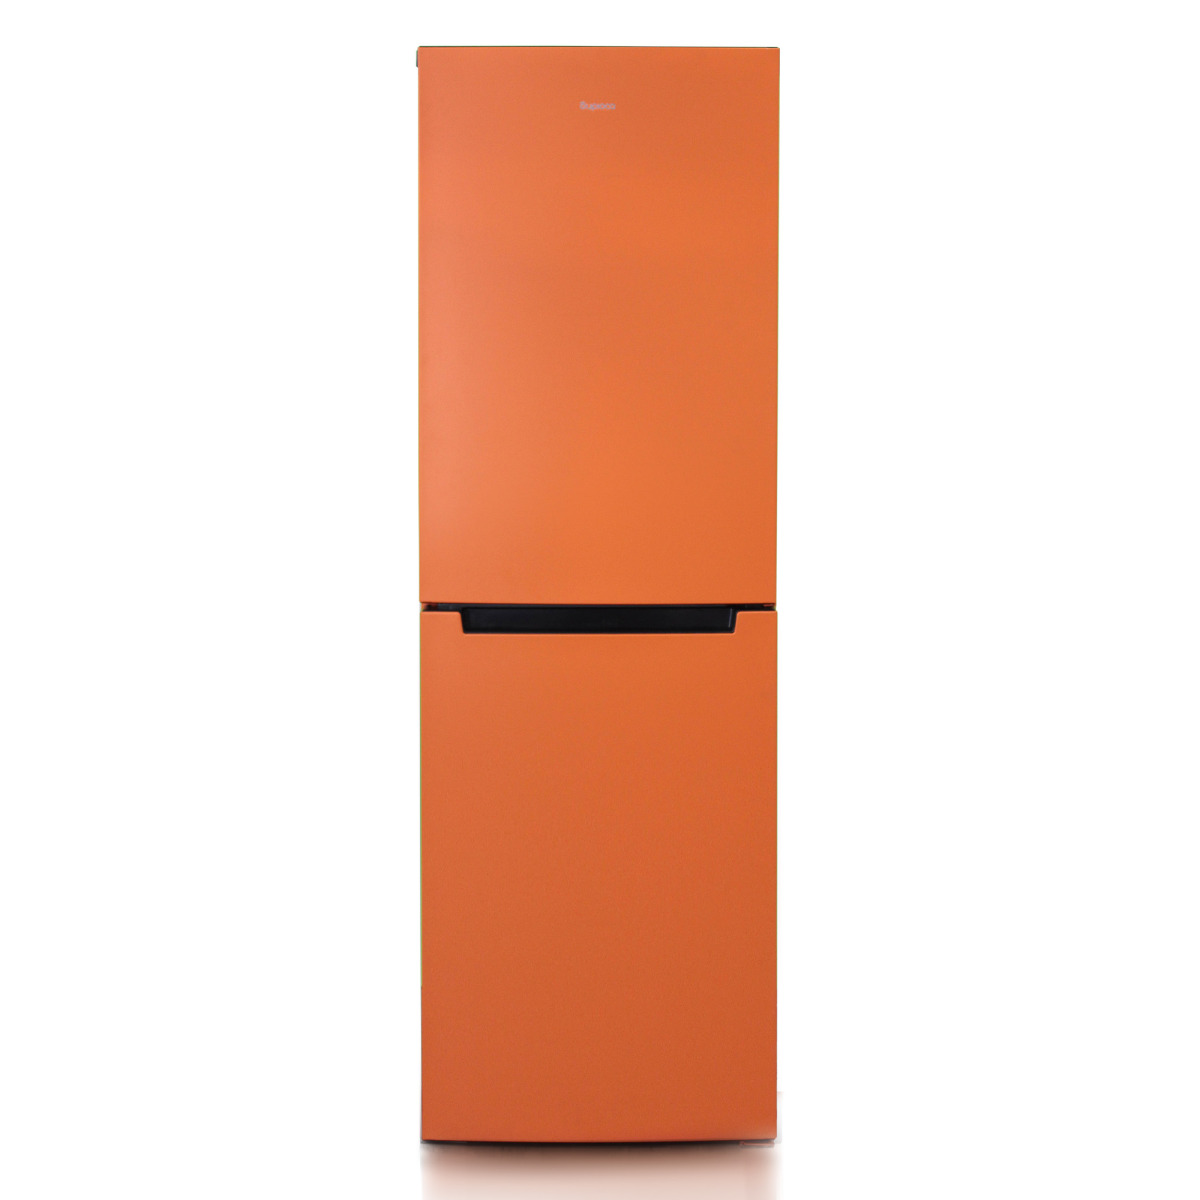 БИРЮСА T 840 NF  Холодильник - уменьшенная 7